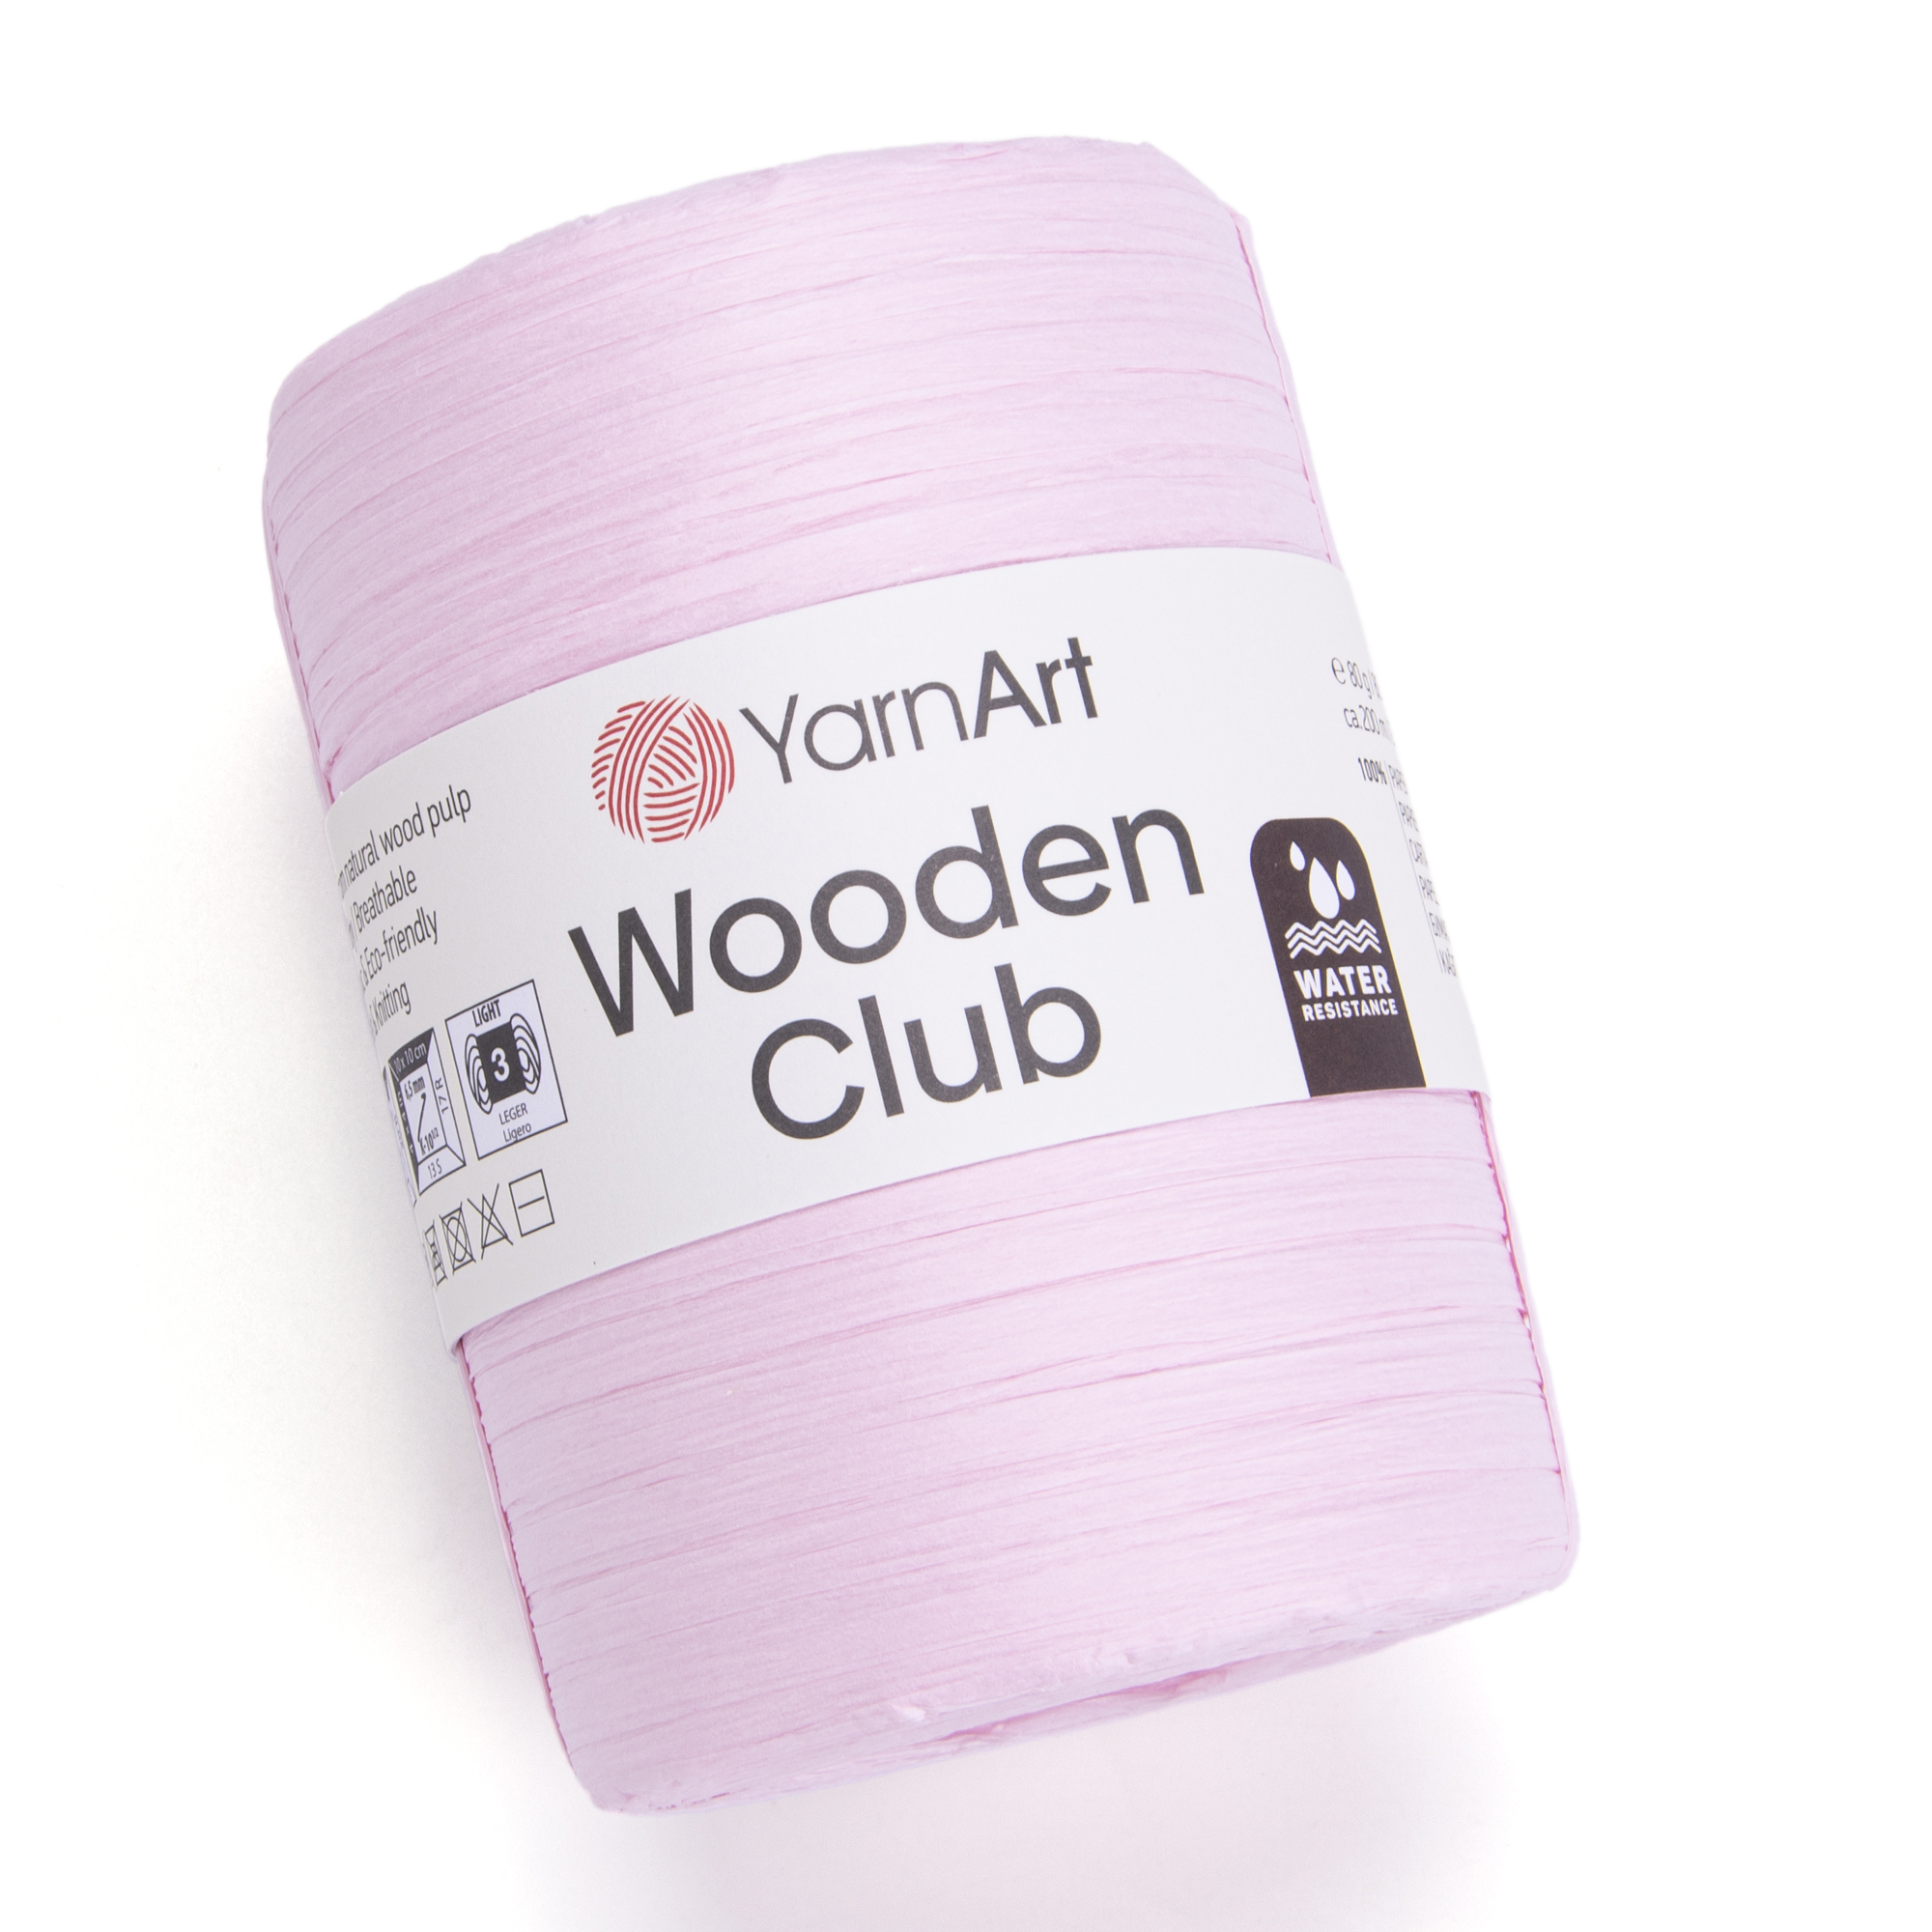 Wooden Club – 1605